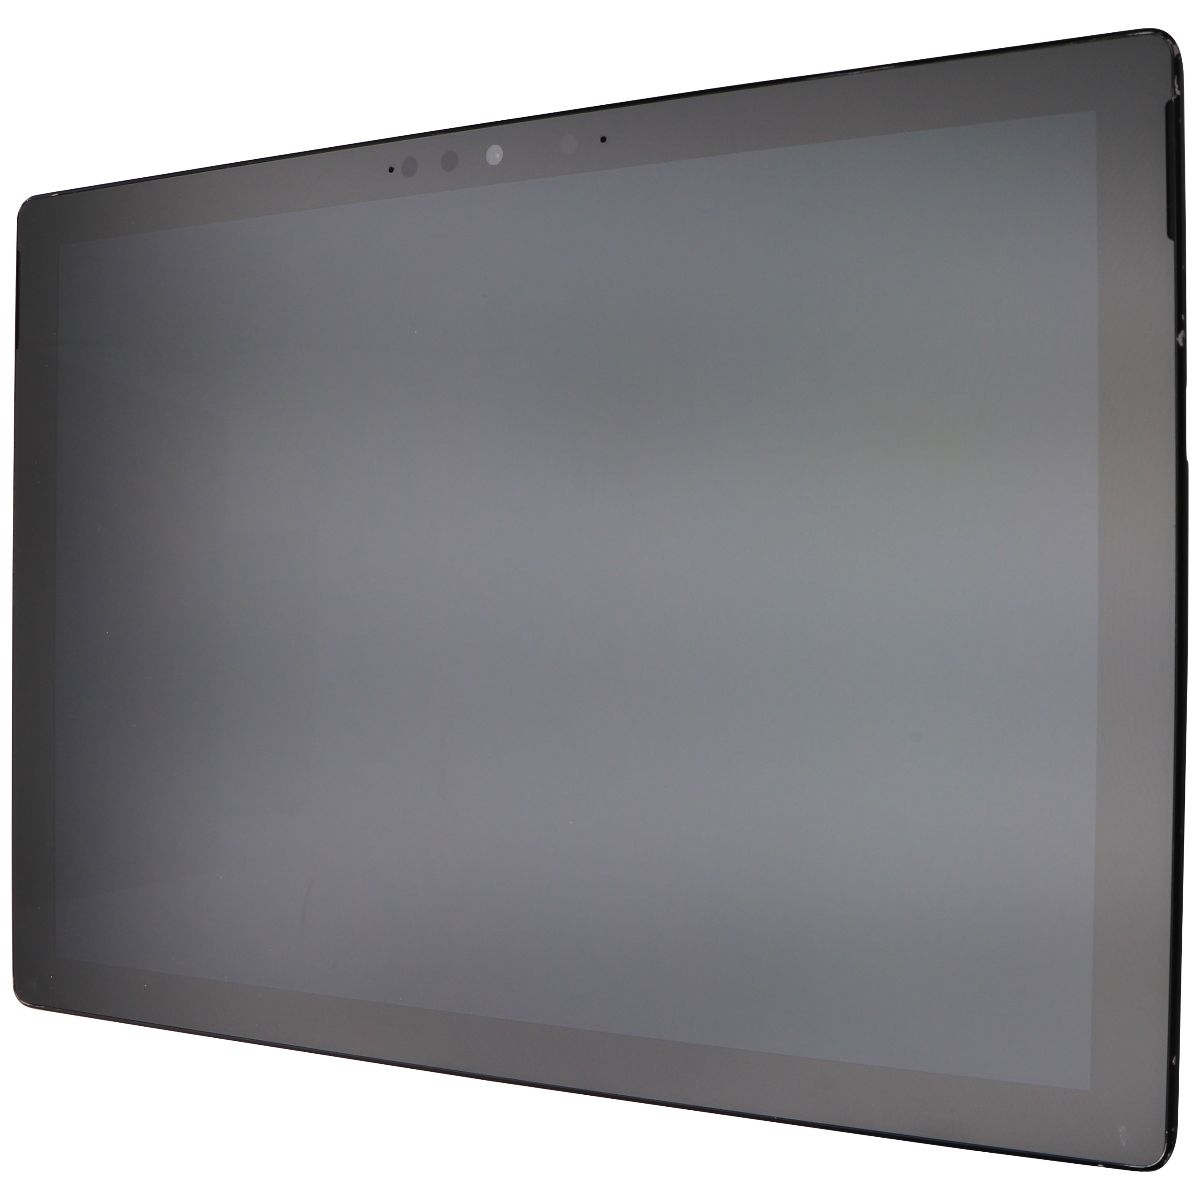 FAIR Microsoft Surface Pro 7 (12.3-inch) 1866 (i5-1035G4/256GB/8GB) - Black